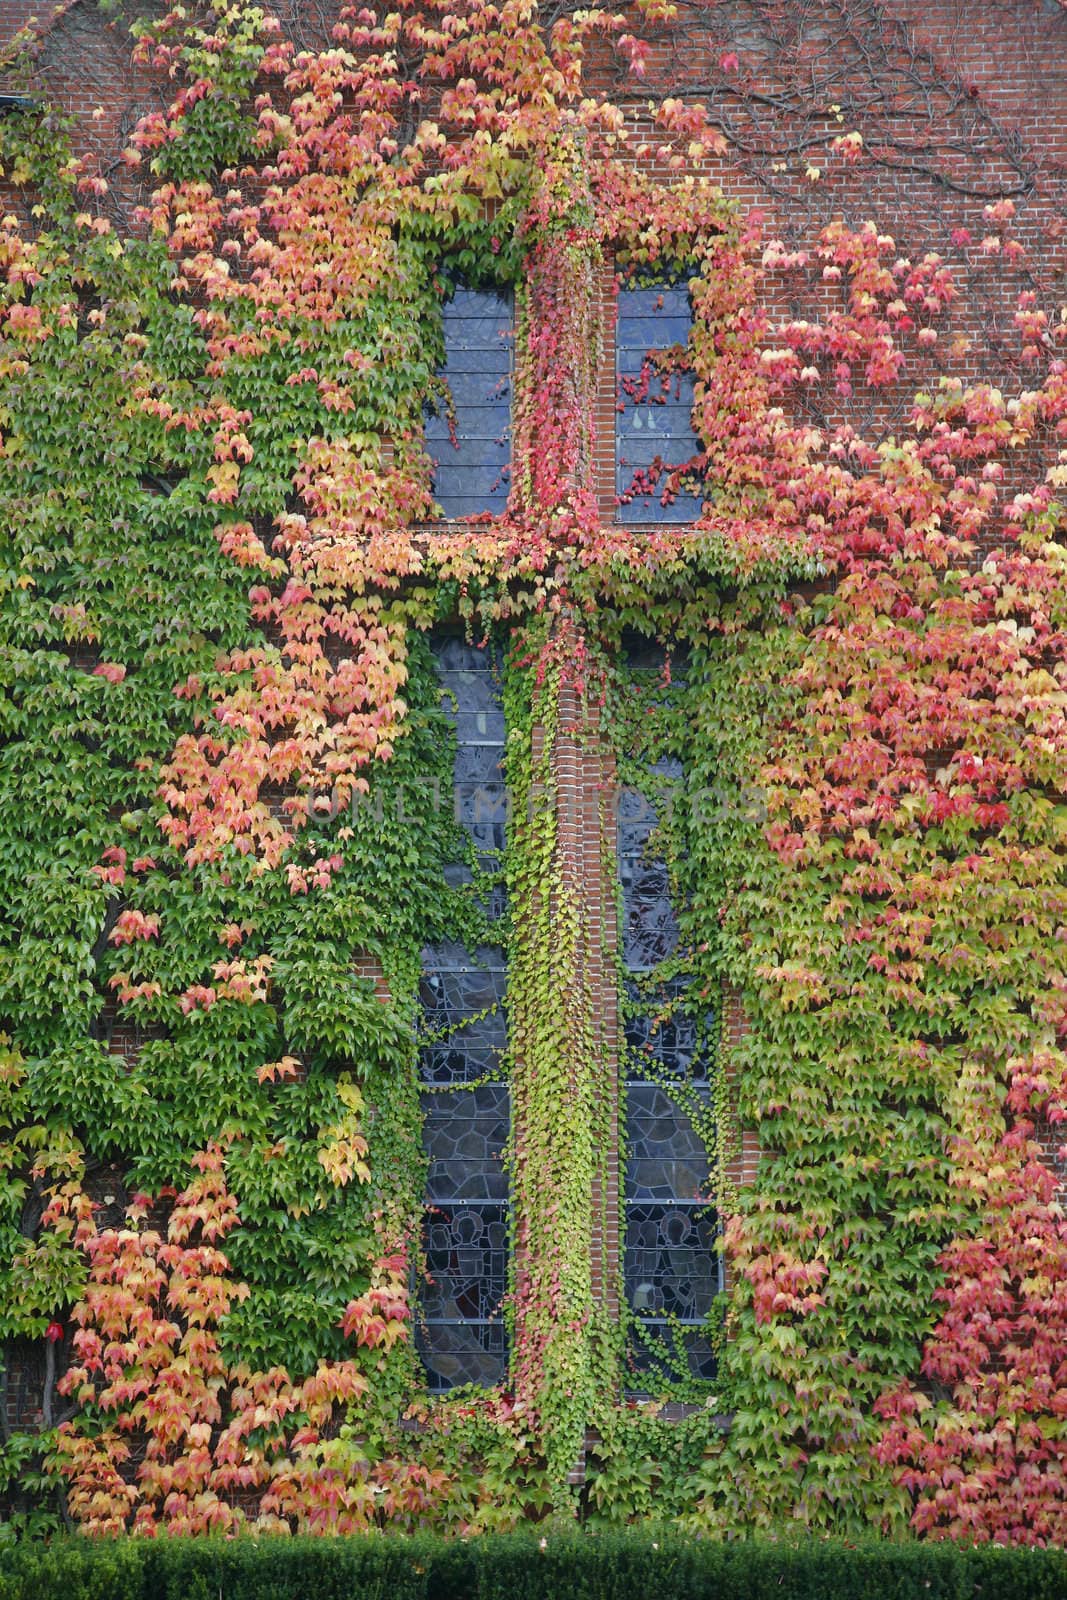 Virginia Creeper at chapel wall in autumn colors.